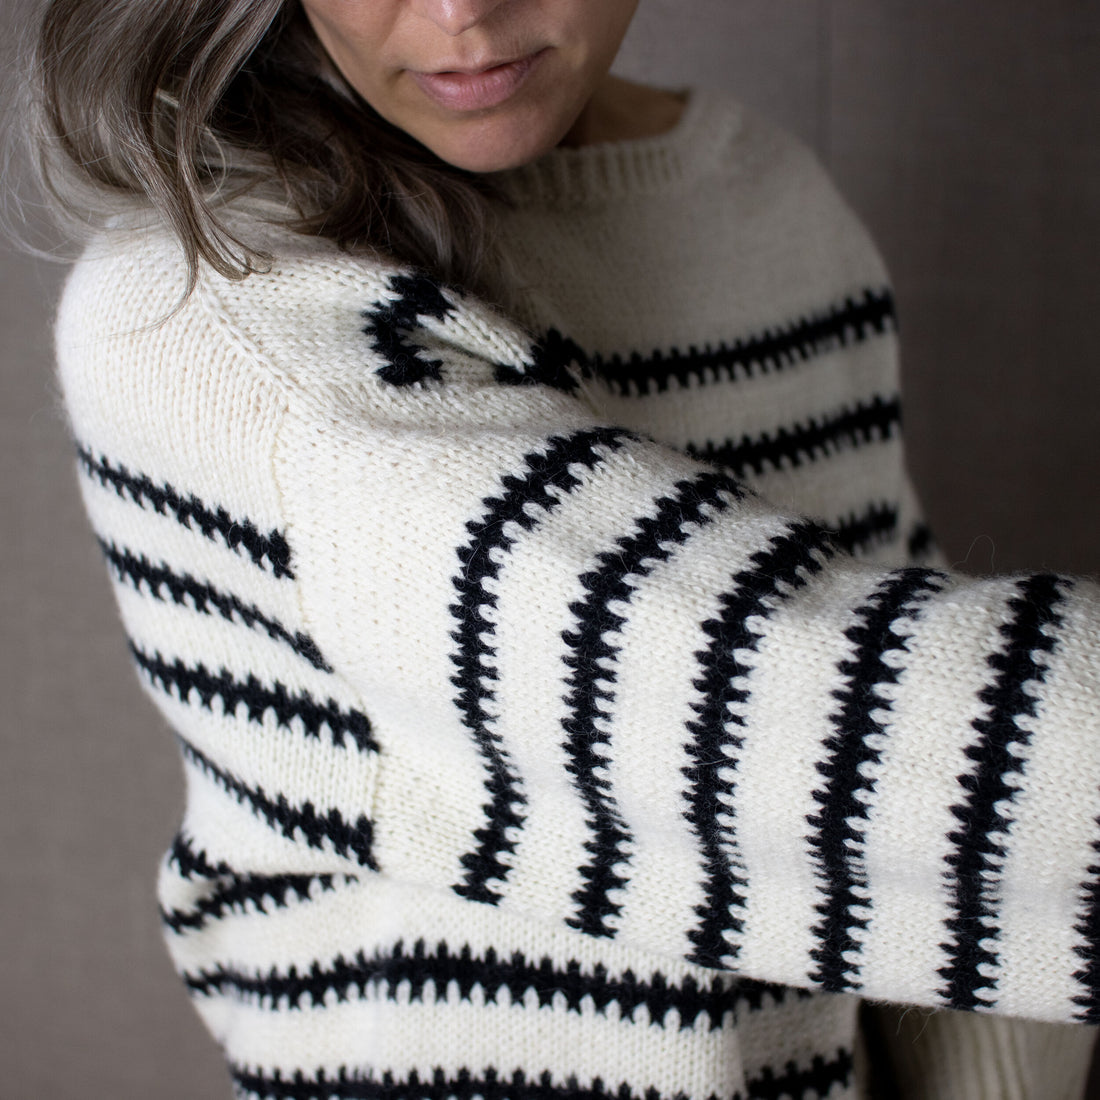 Anne Ventzel - Sailor sweater